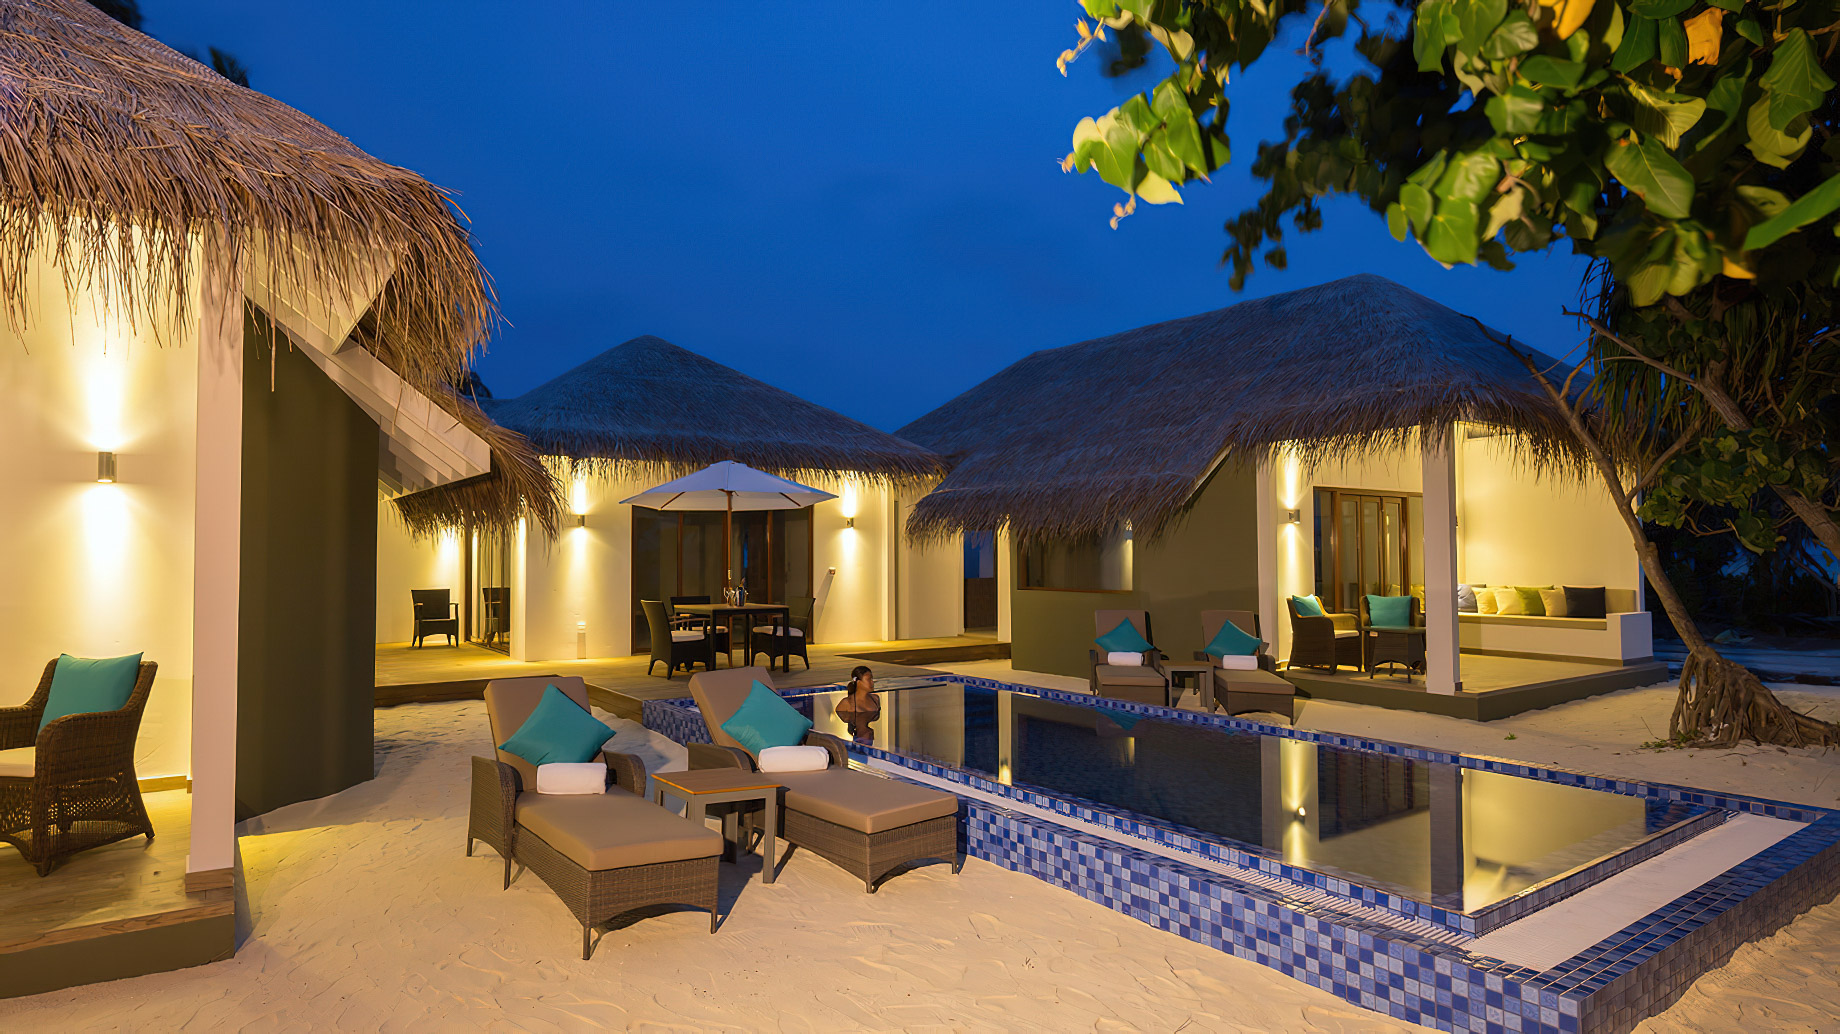 Cocoon Maldives Resort – Ookolhufinolhu, Lhaviyani Atoll, Maldives – Cocoon Guest Suite Night